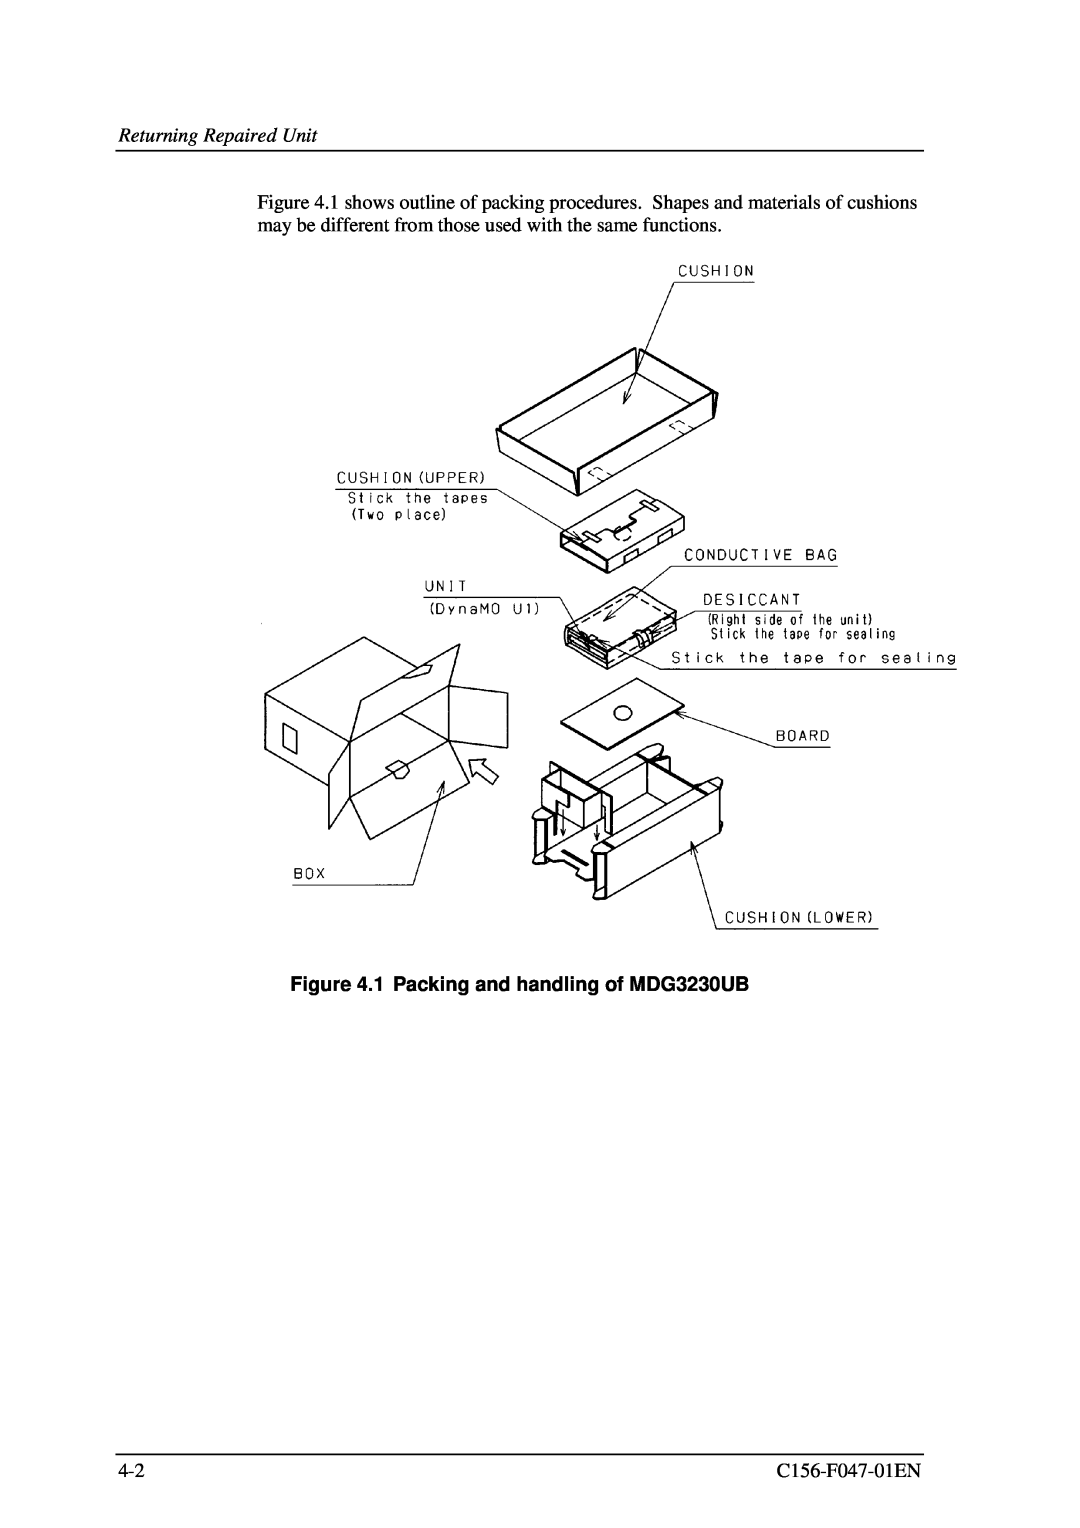 Fujitsu manual Returning Repaired Unit, 1 Packing and handling of MDG3230UB 